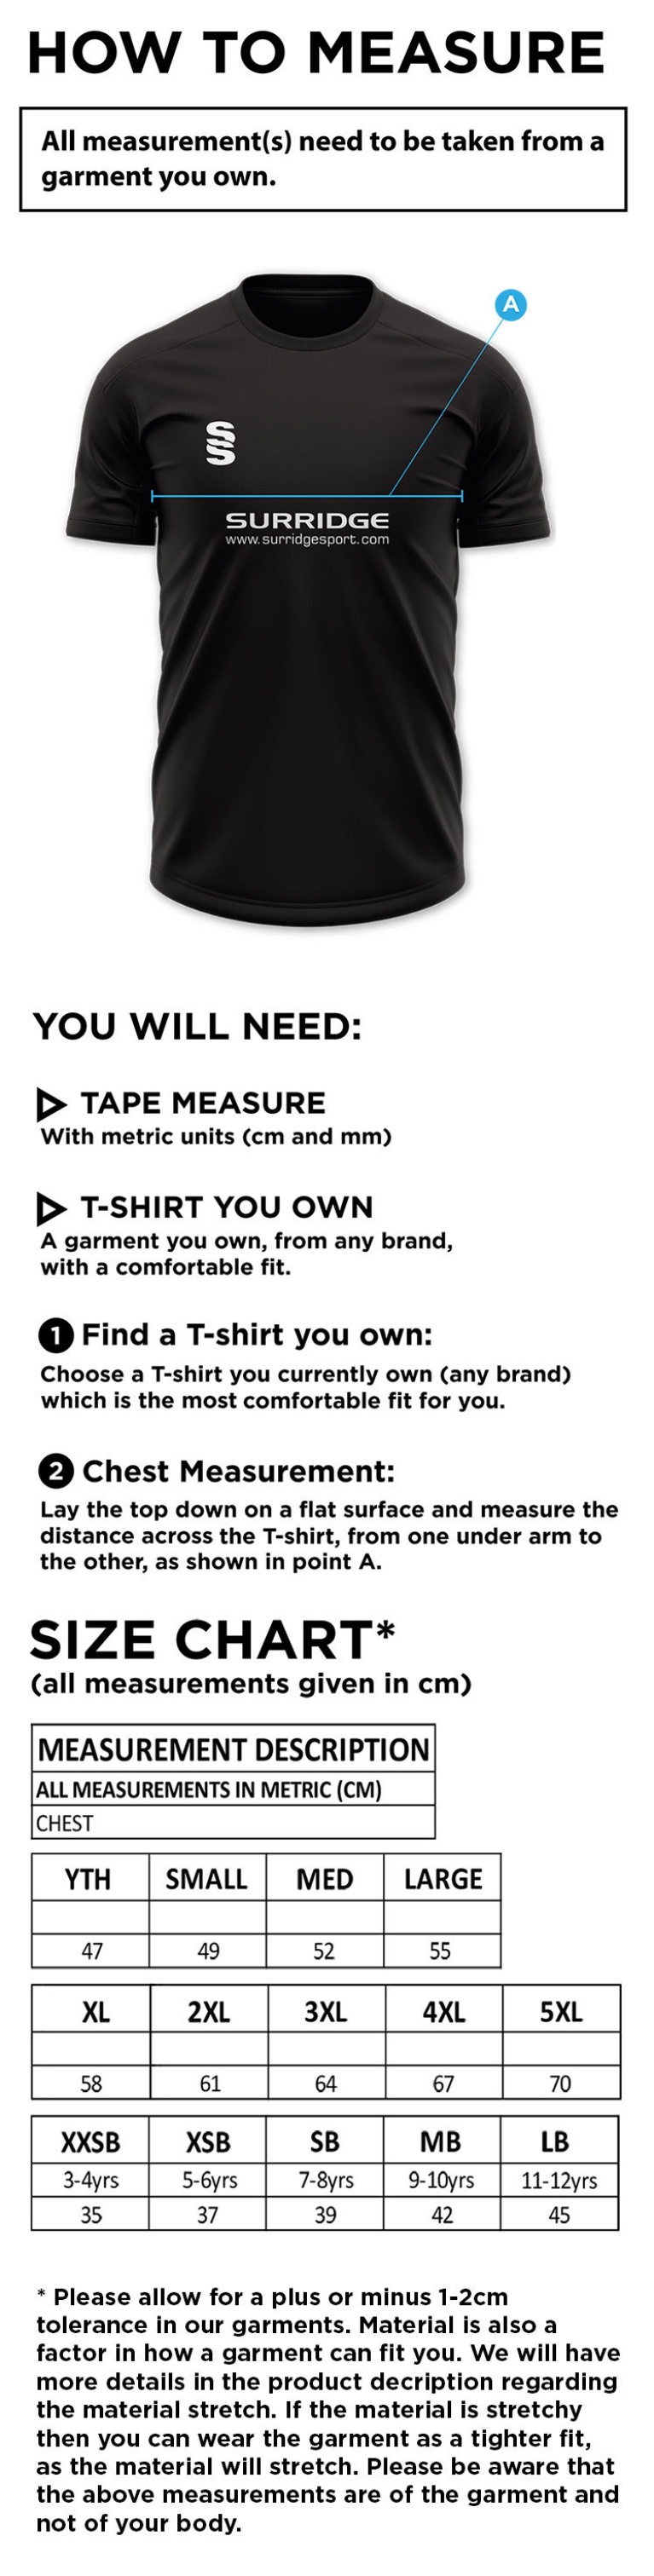 Rustington CC - Blade Training Shirt - Size Guide